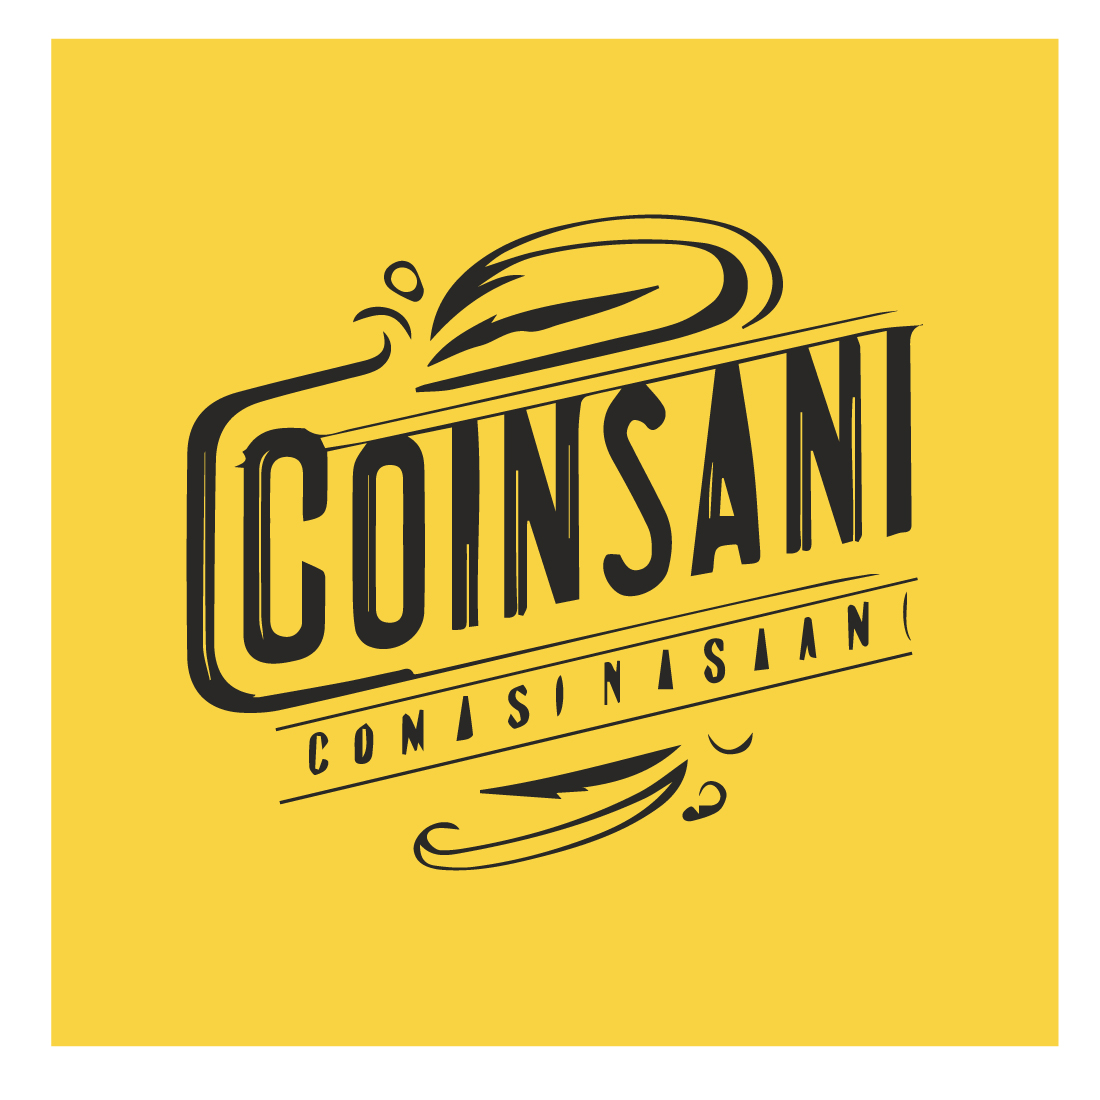 Logo for a company called consani.